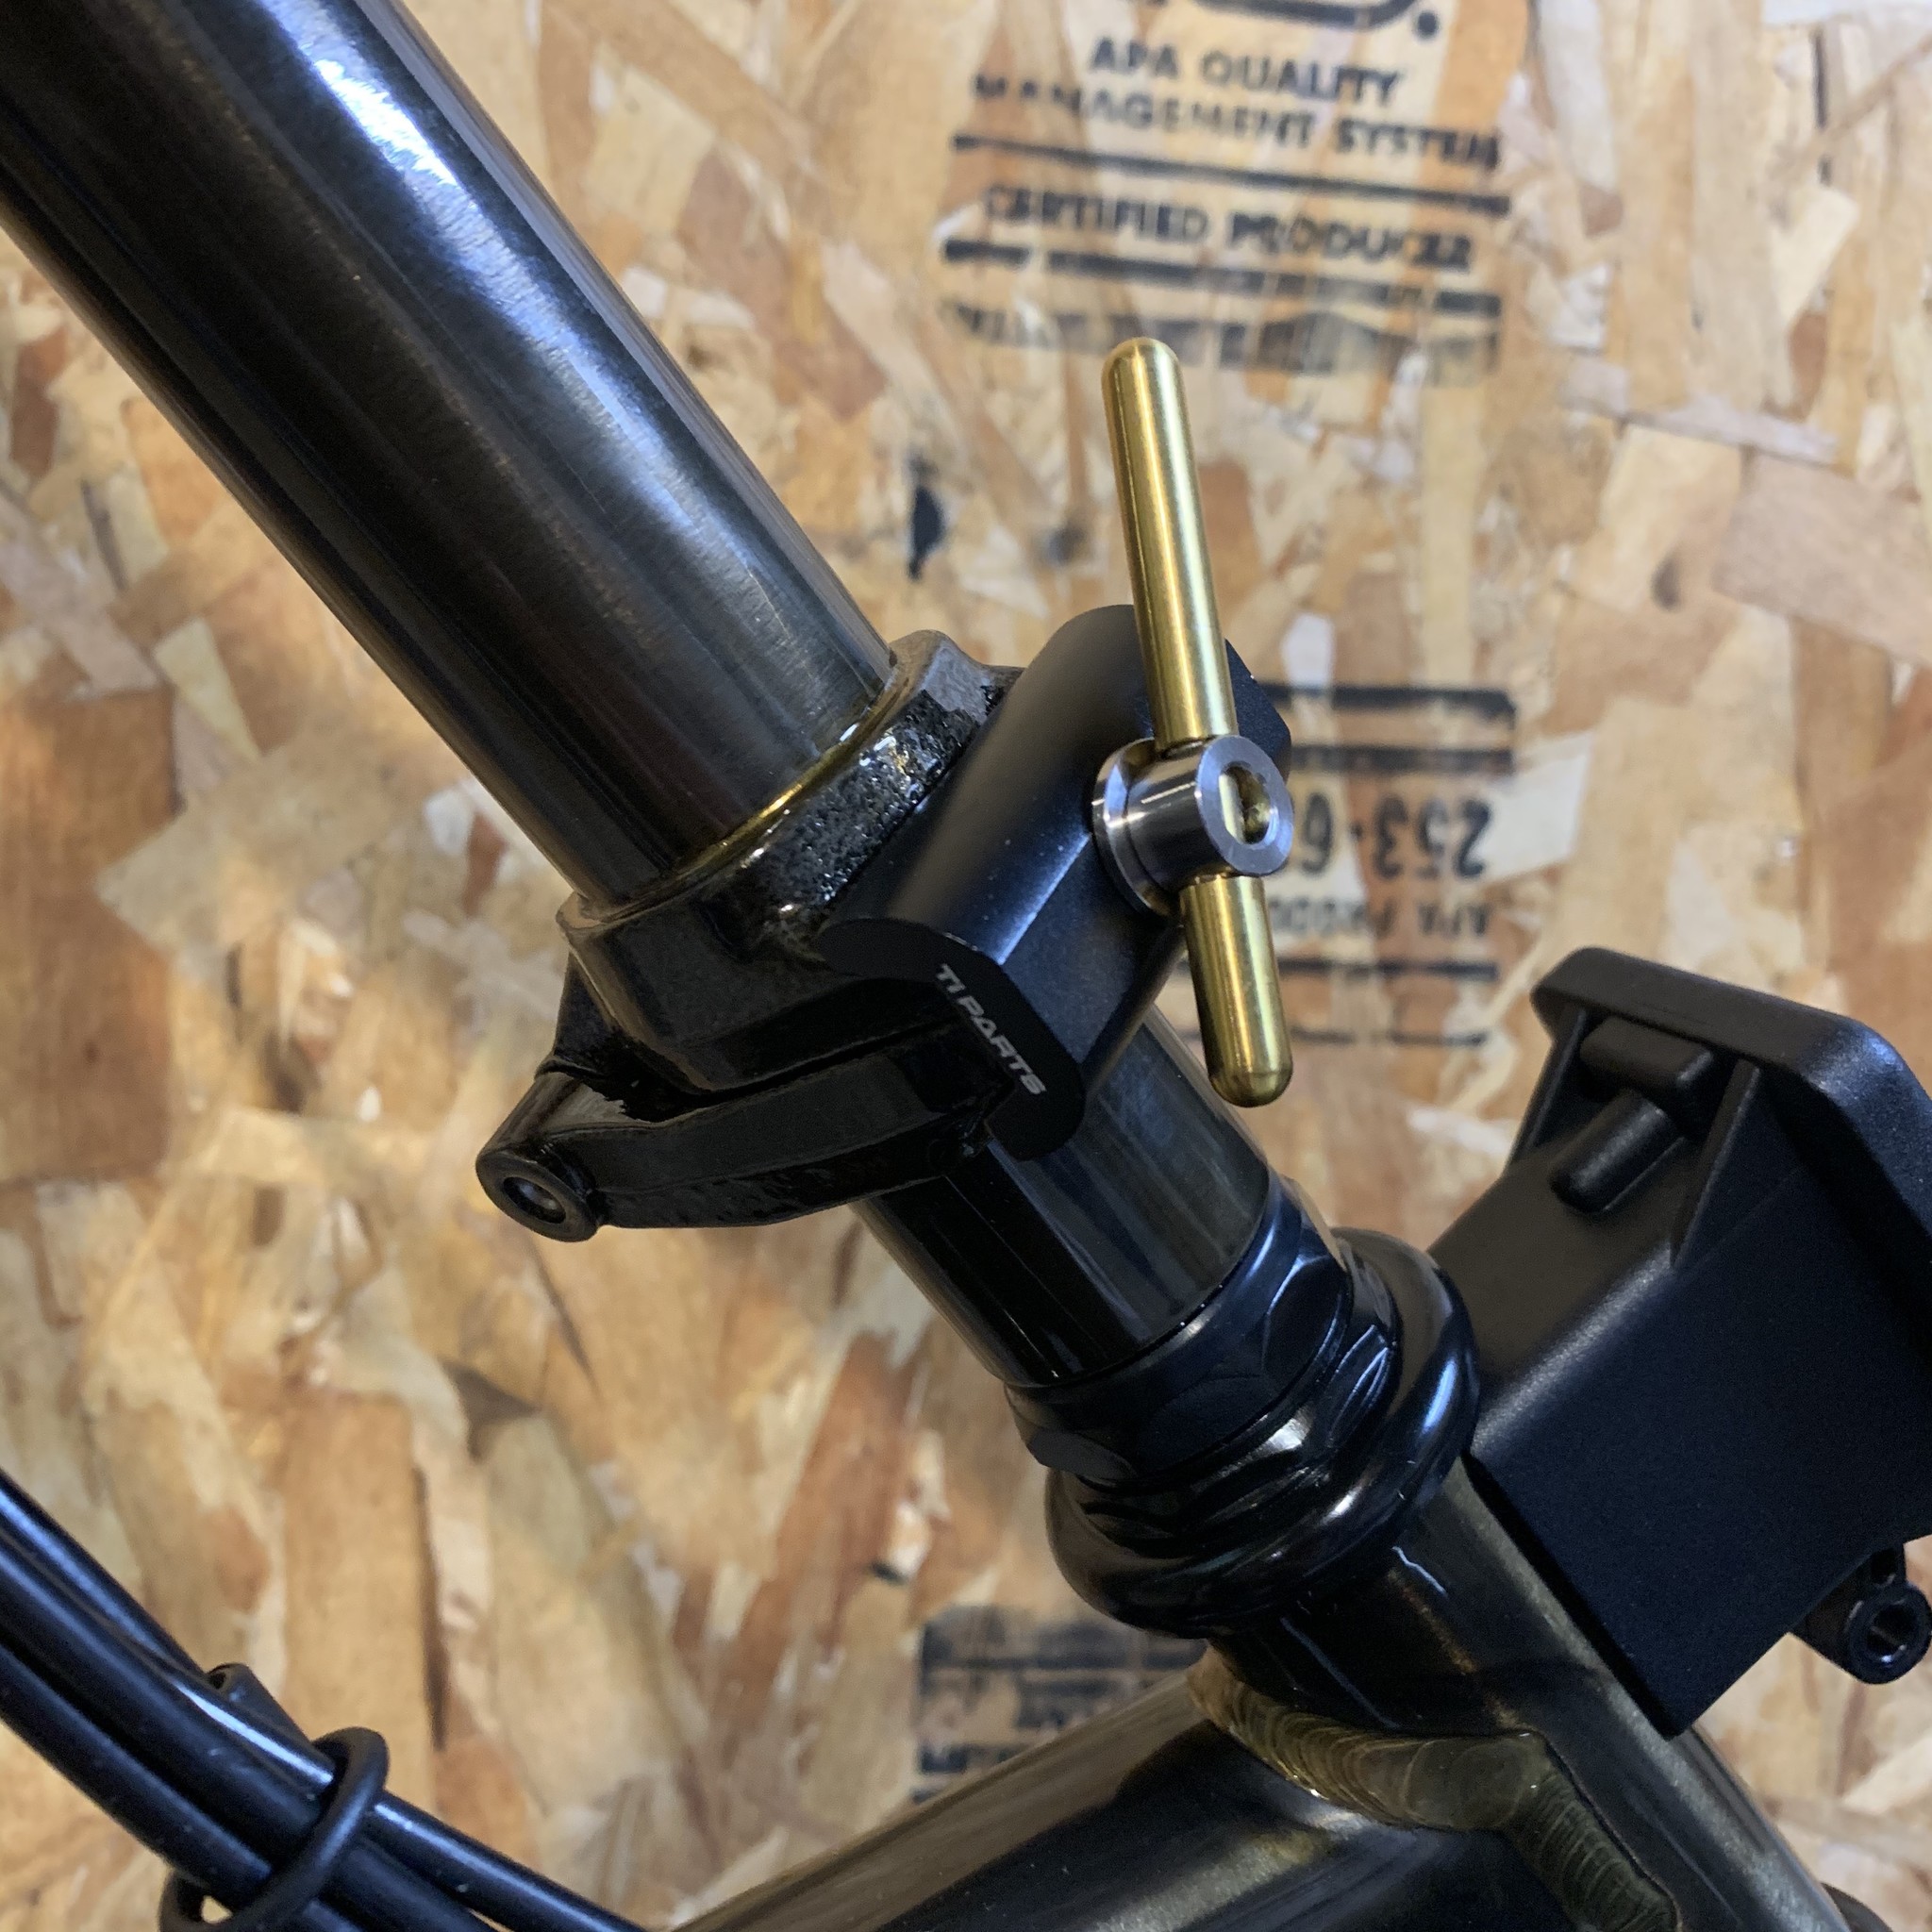 folding bike hinge clamp